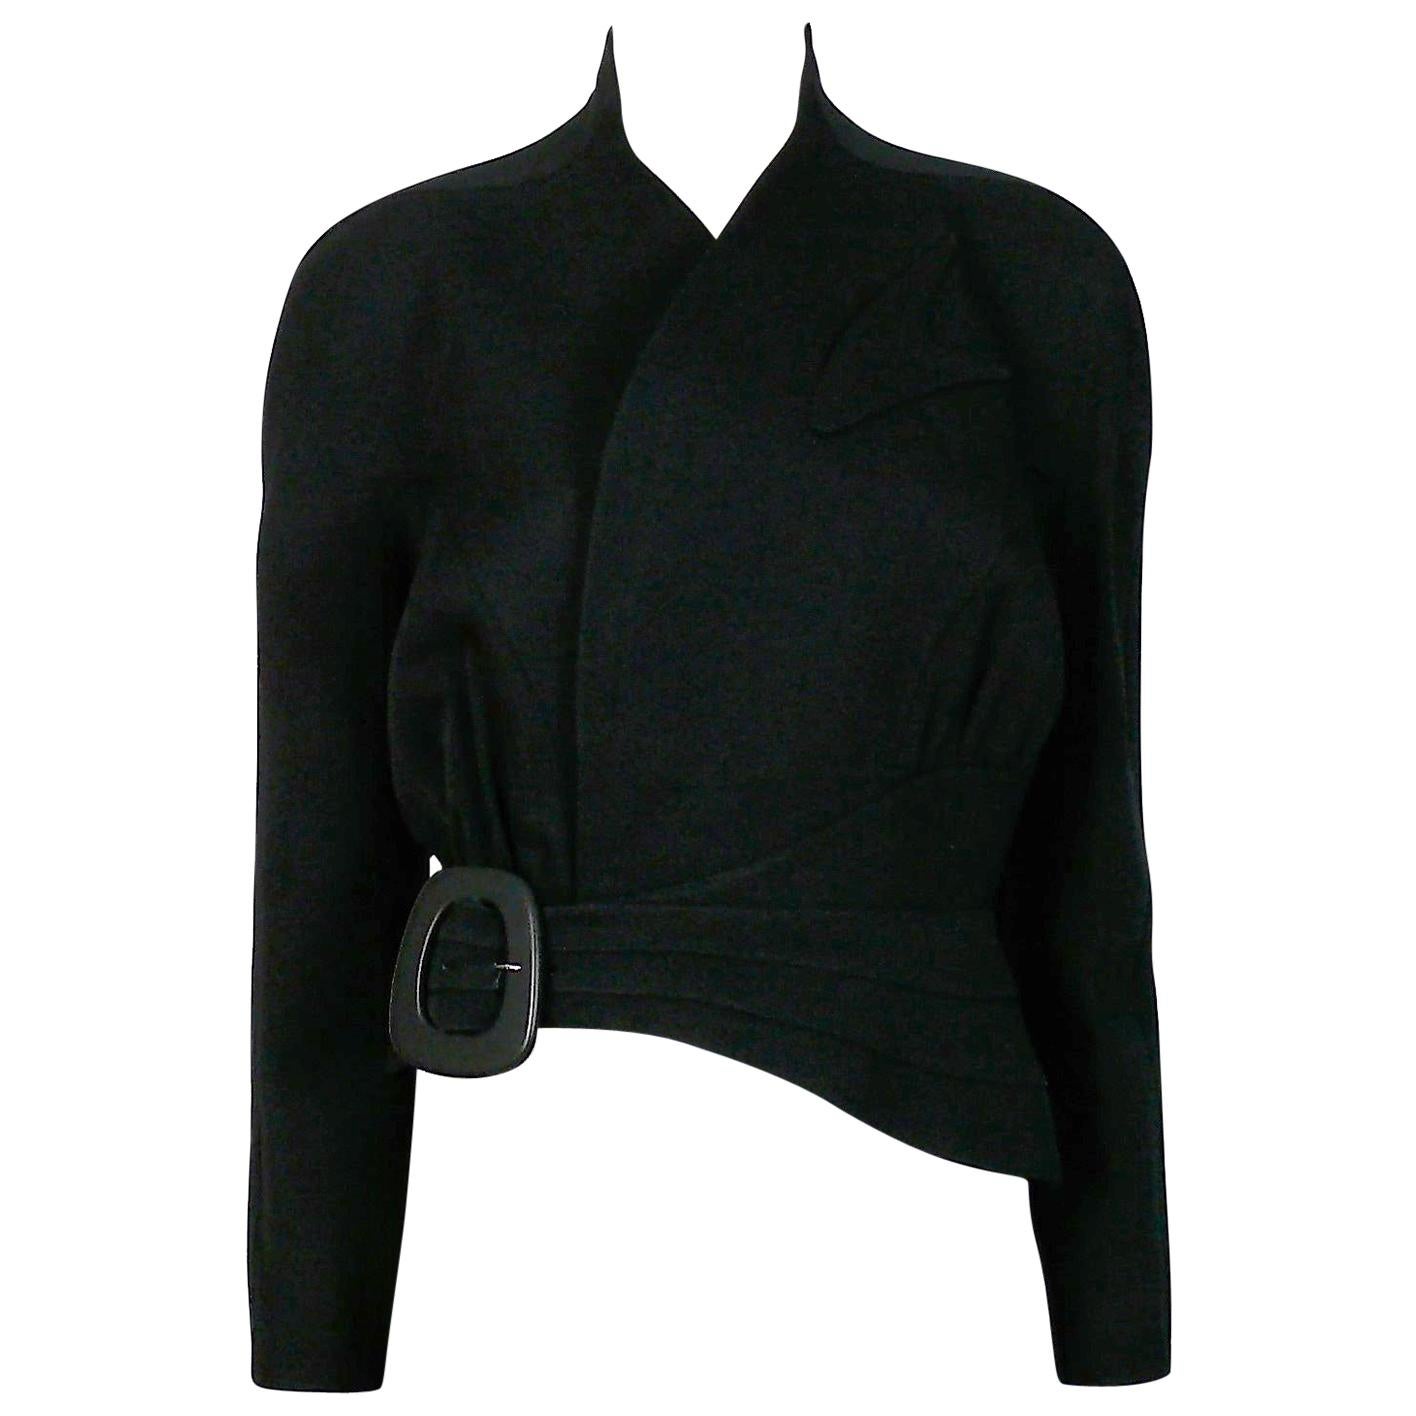 Thierry Mugler Vintage Black Asymmetrical Iconic Jacket